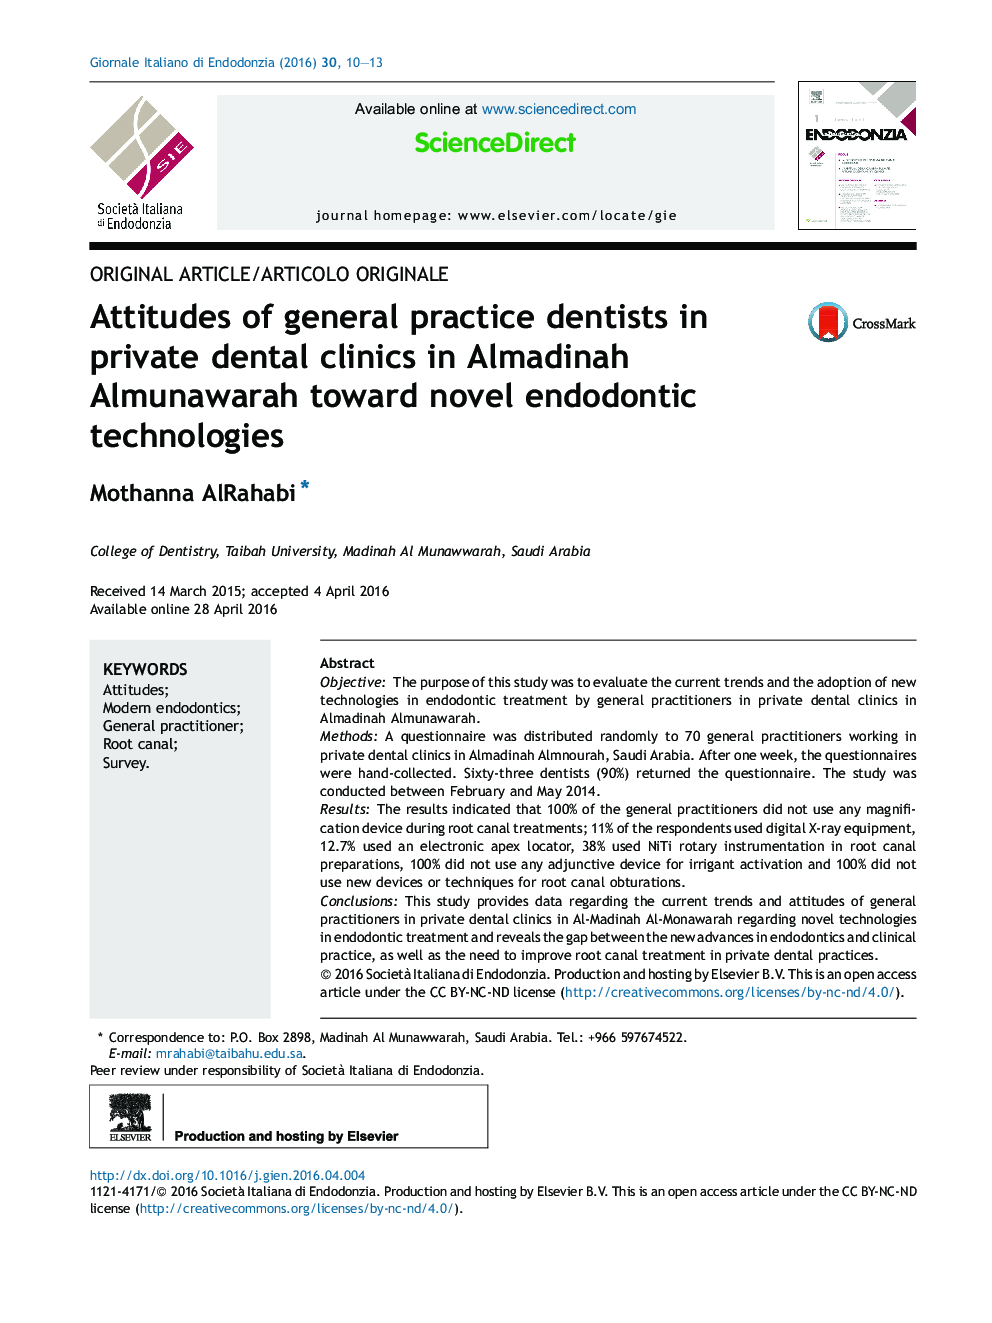 Attitudes of general practice dentists in private dental clinics in Almadinah Almunawarah toward novel endodontic technologies 